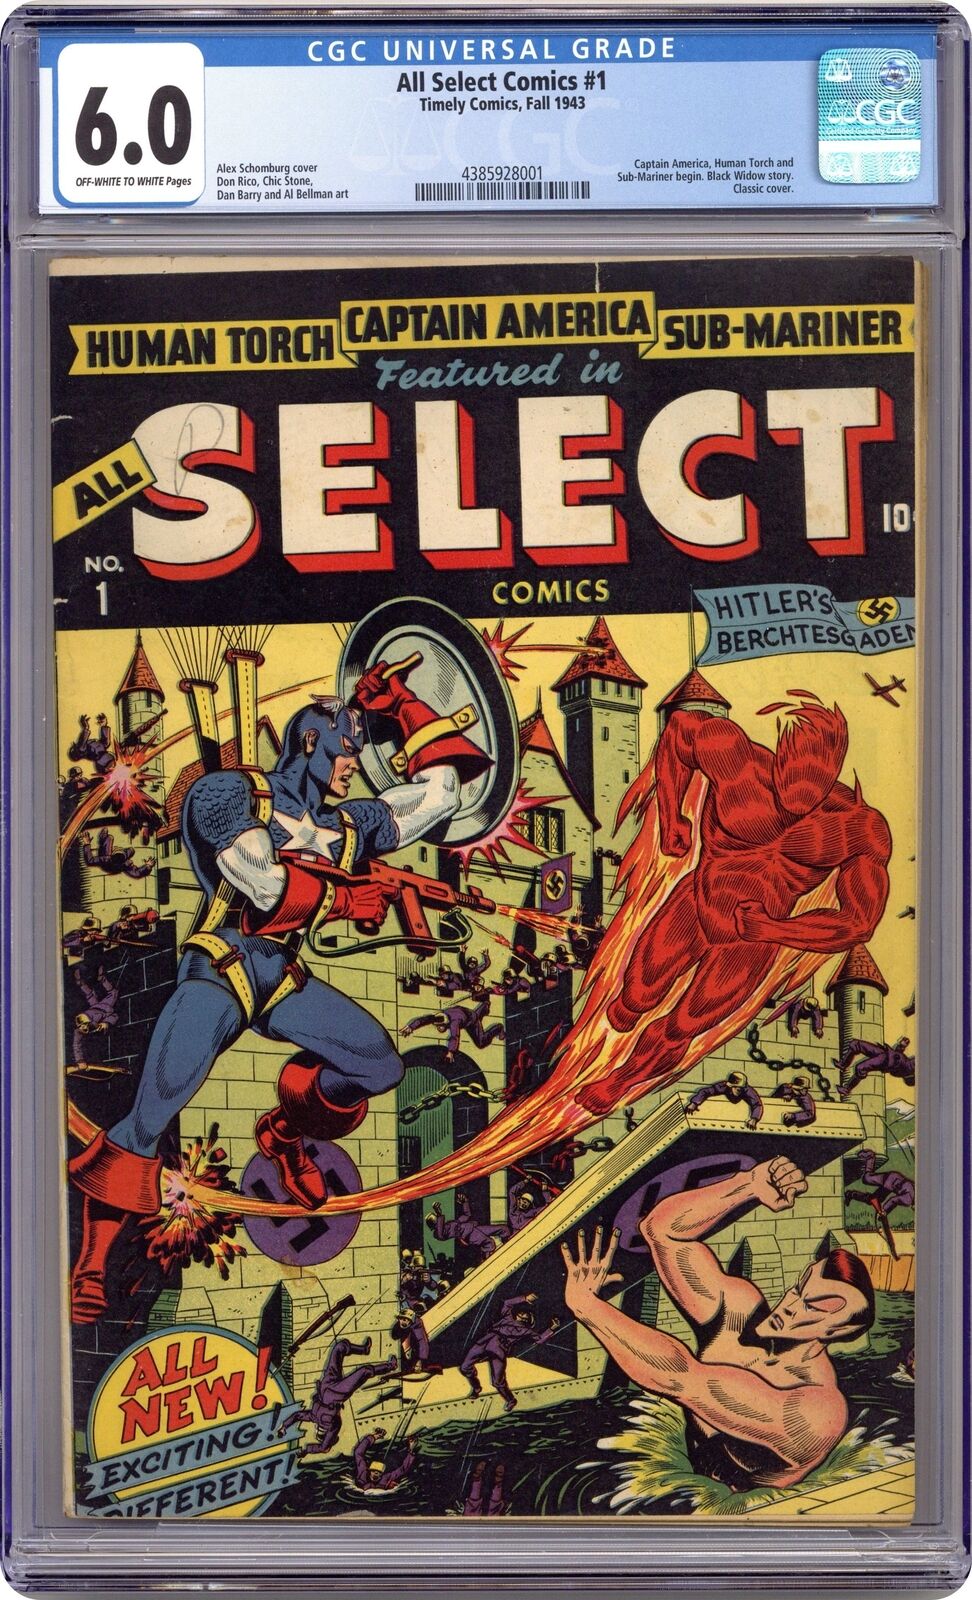 All-Select Comics #1 CGC 6.0 1943 4385928001